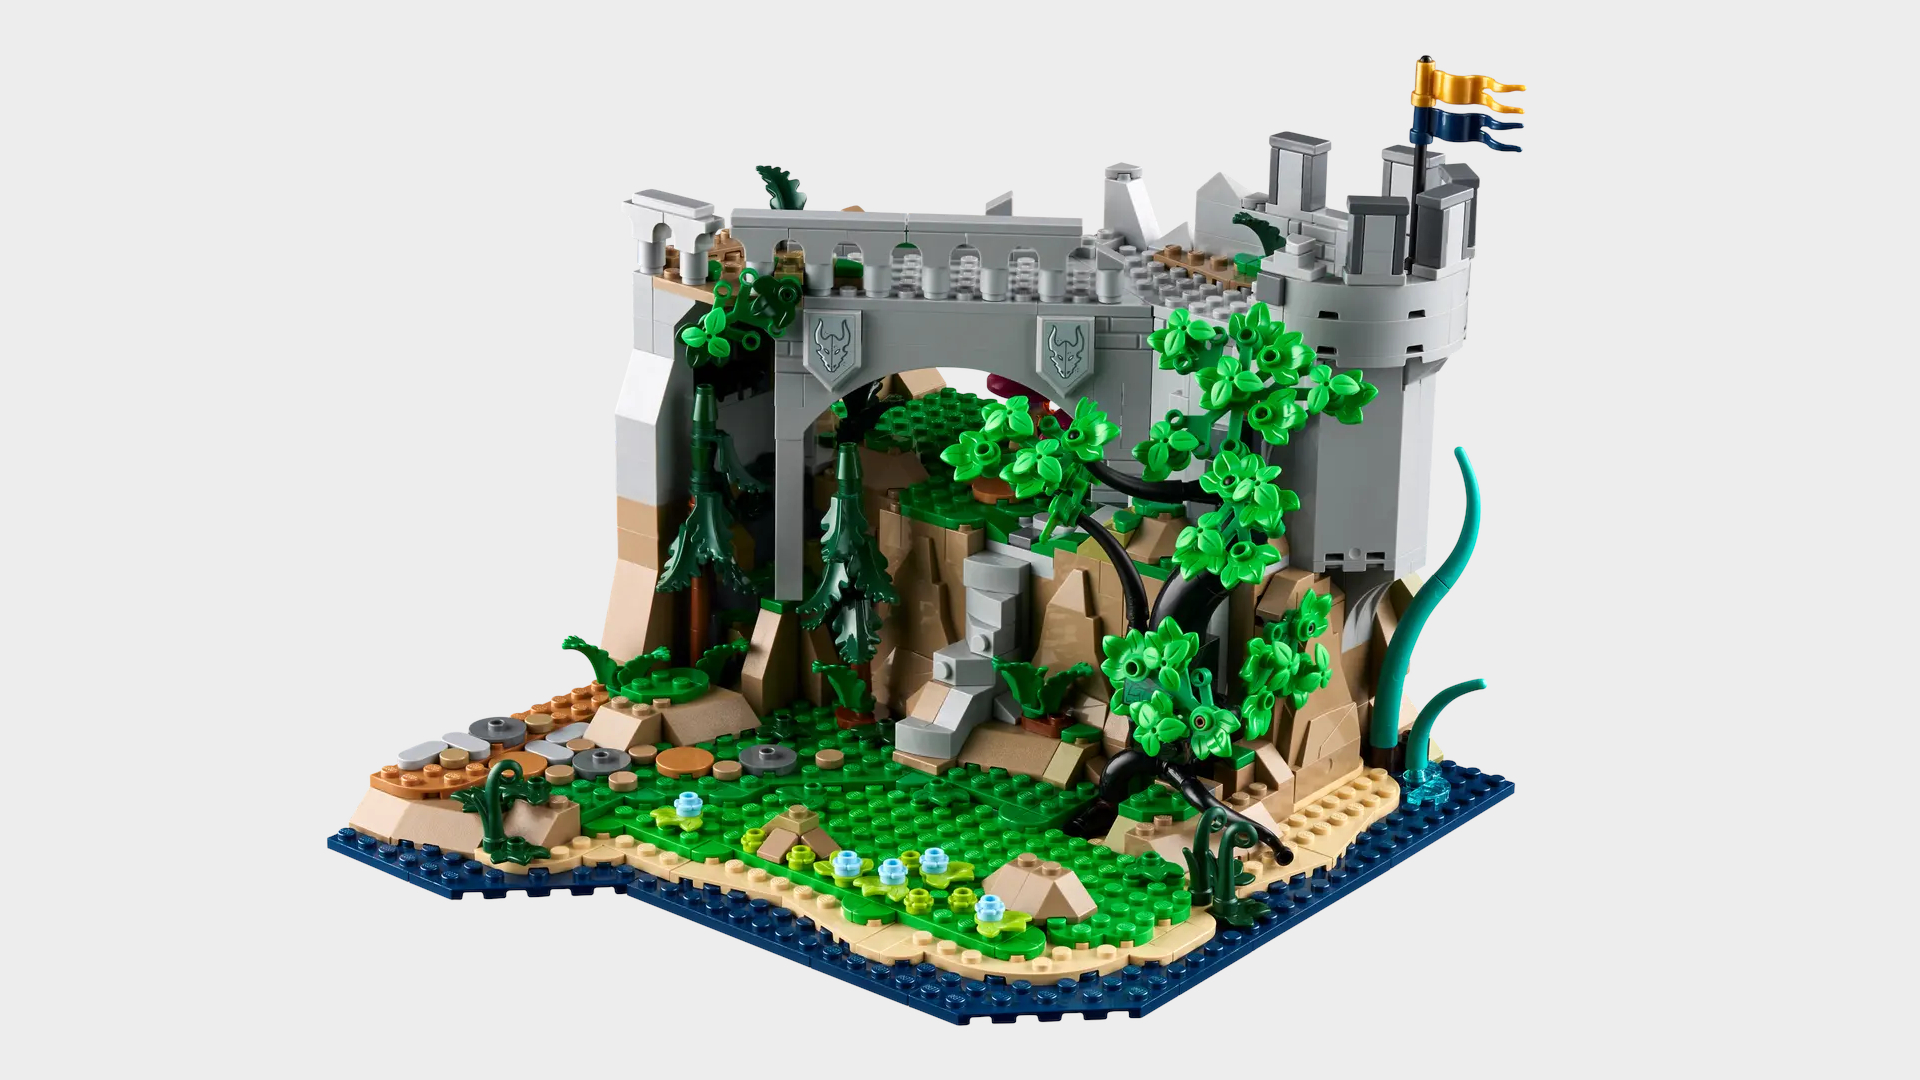 Lego D&D set on a plain background